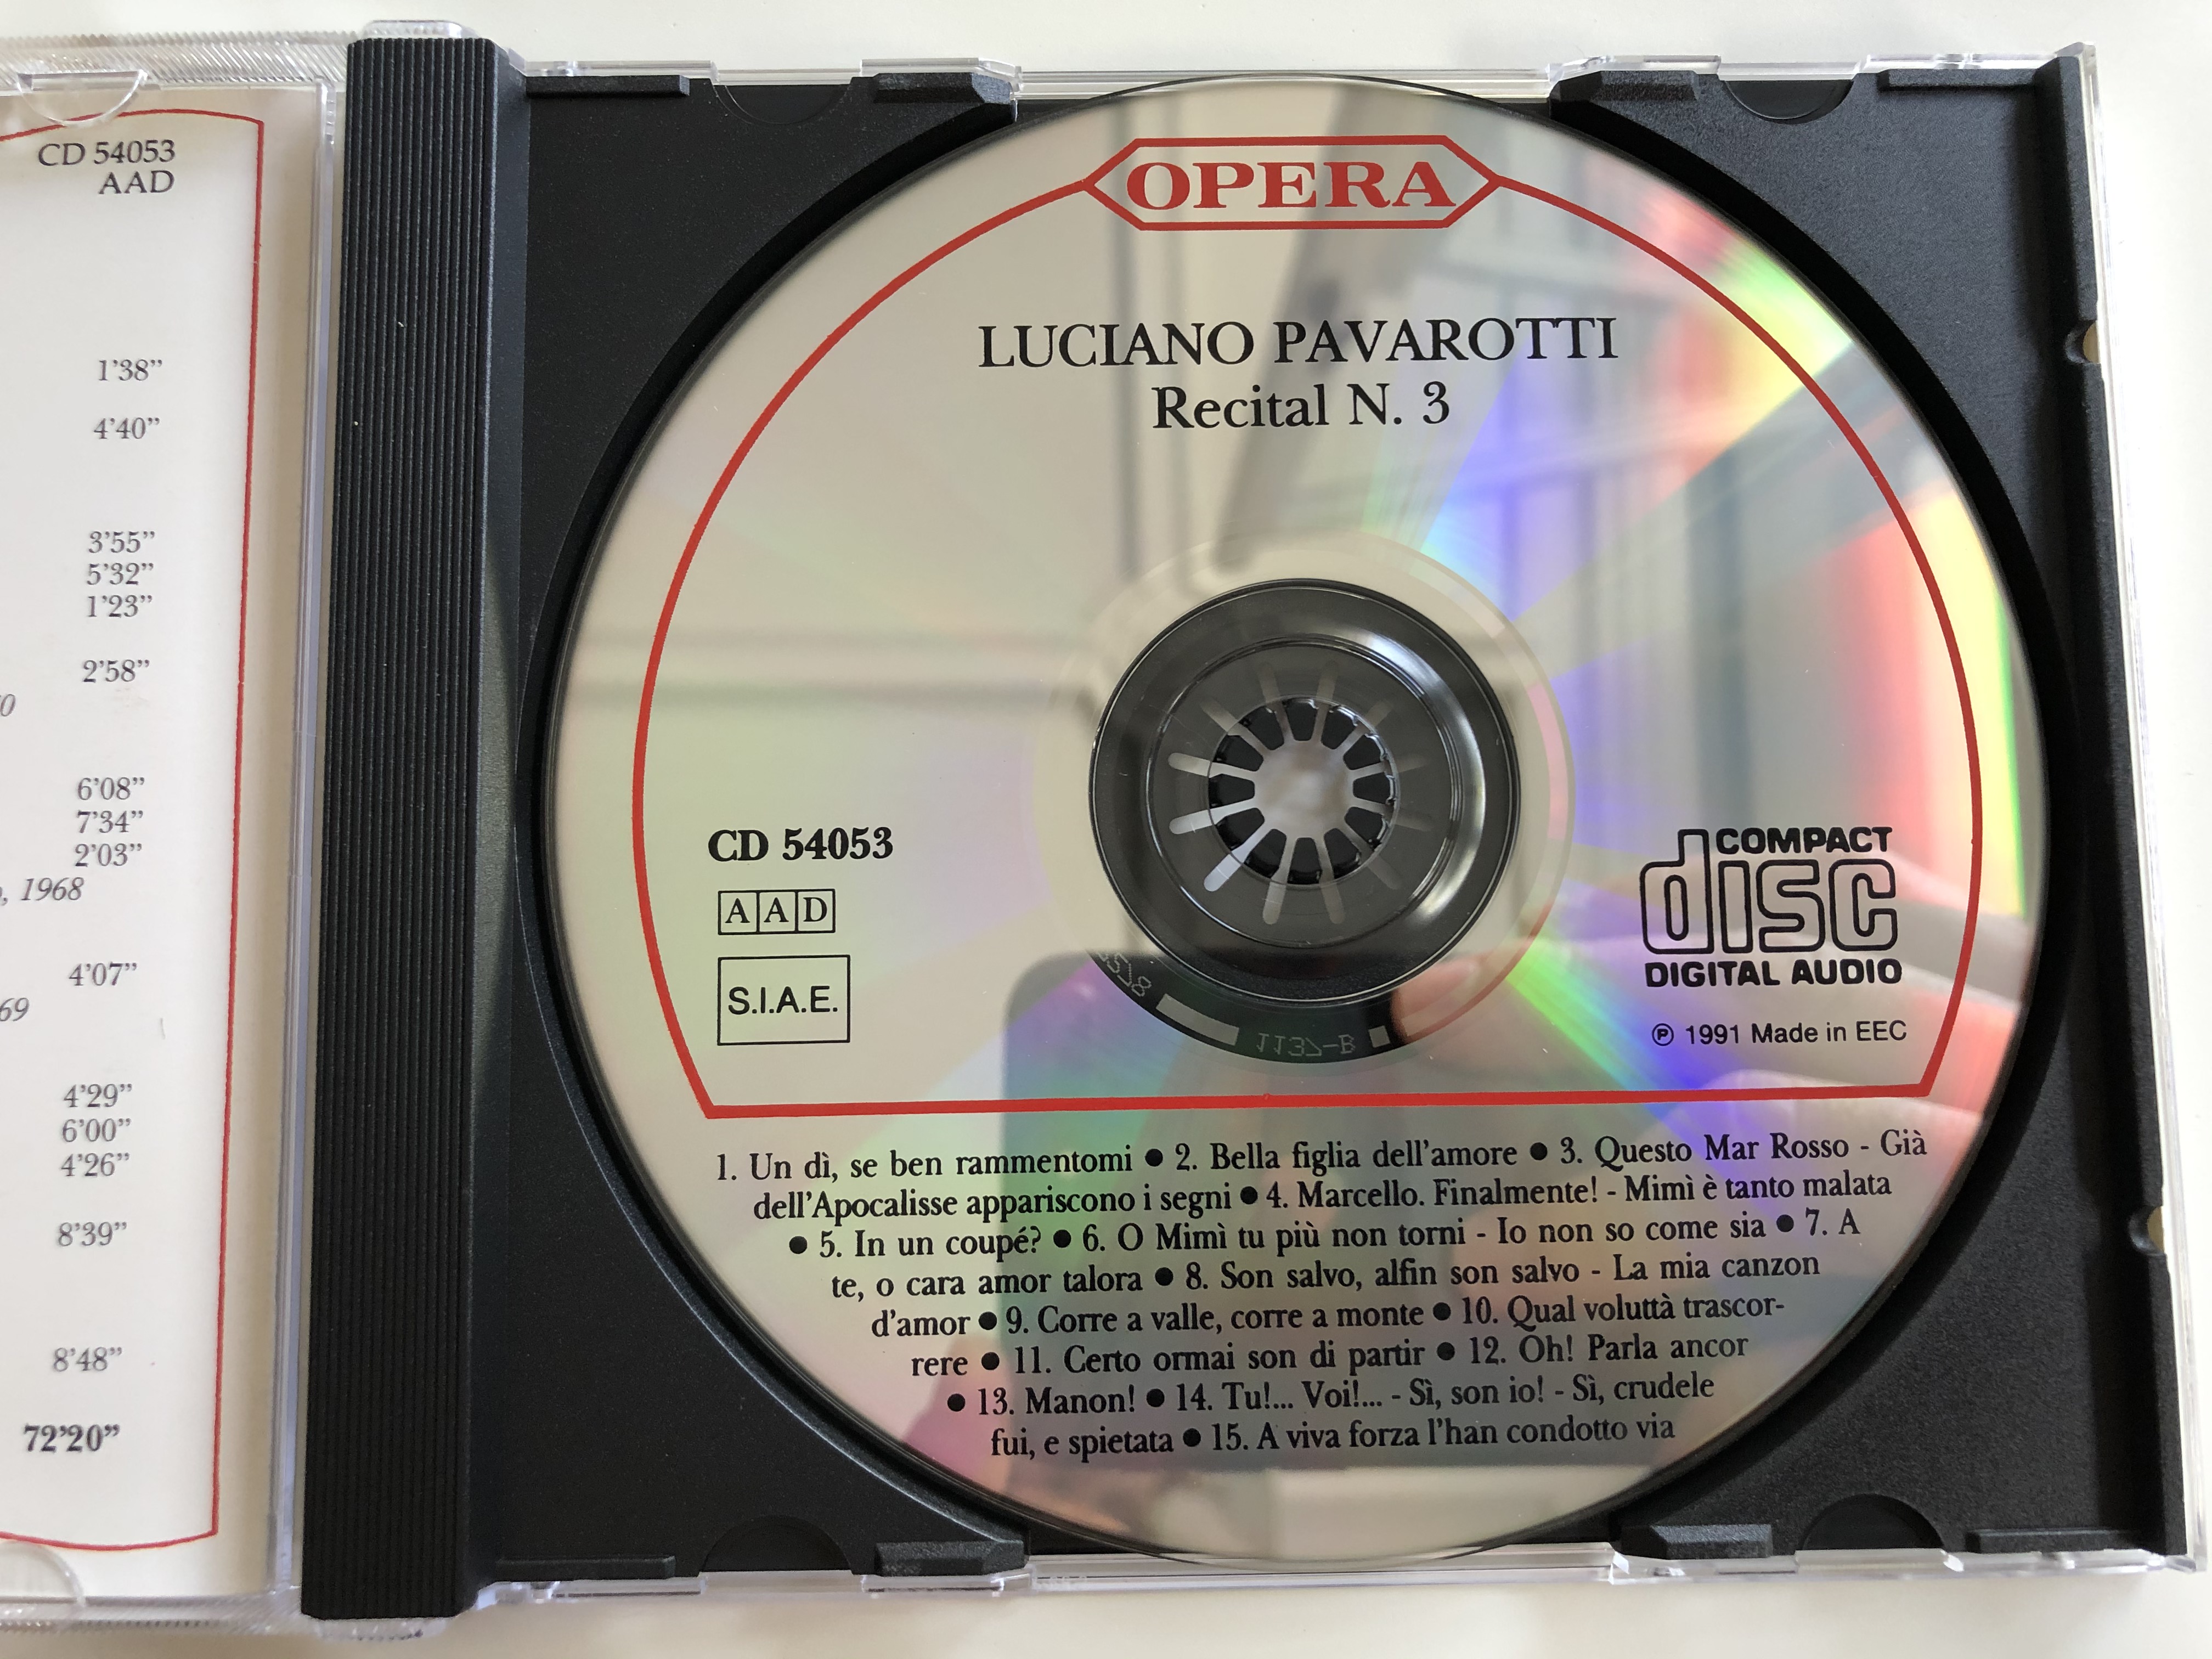 luciano-pavarotti-recital-n.3-opera-audio-cd-1991-cd-54053-3-.jpg